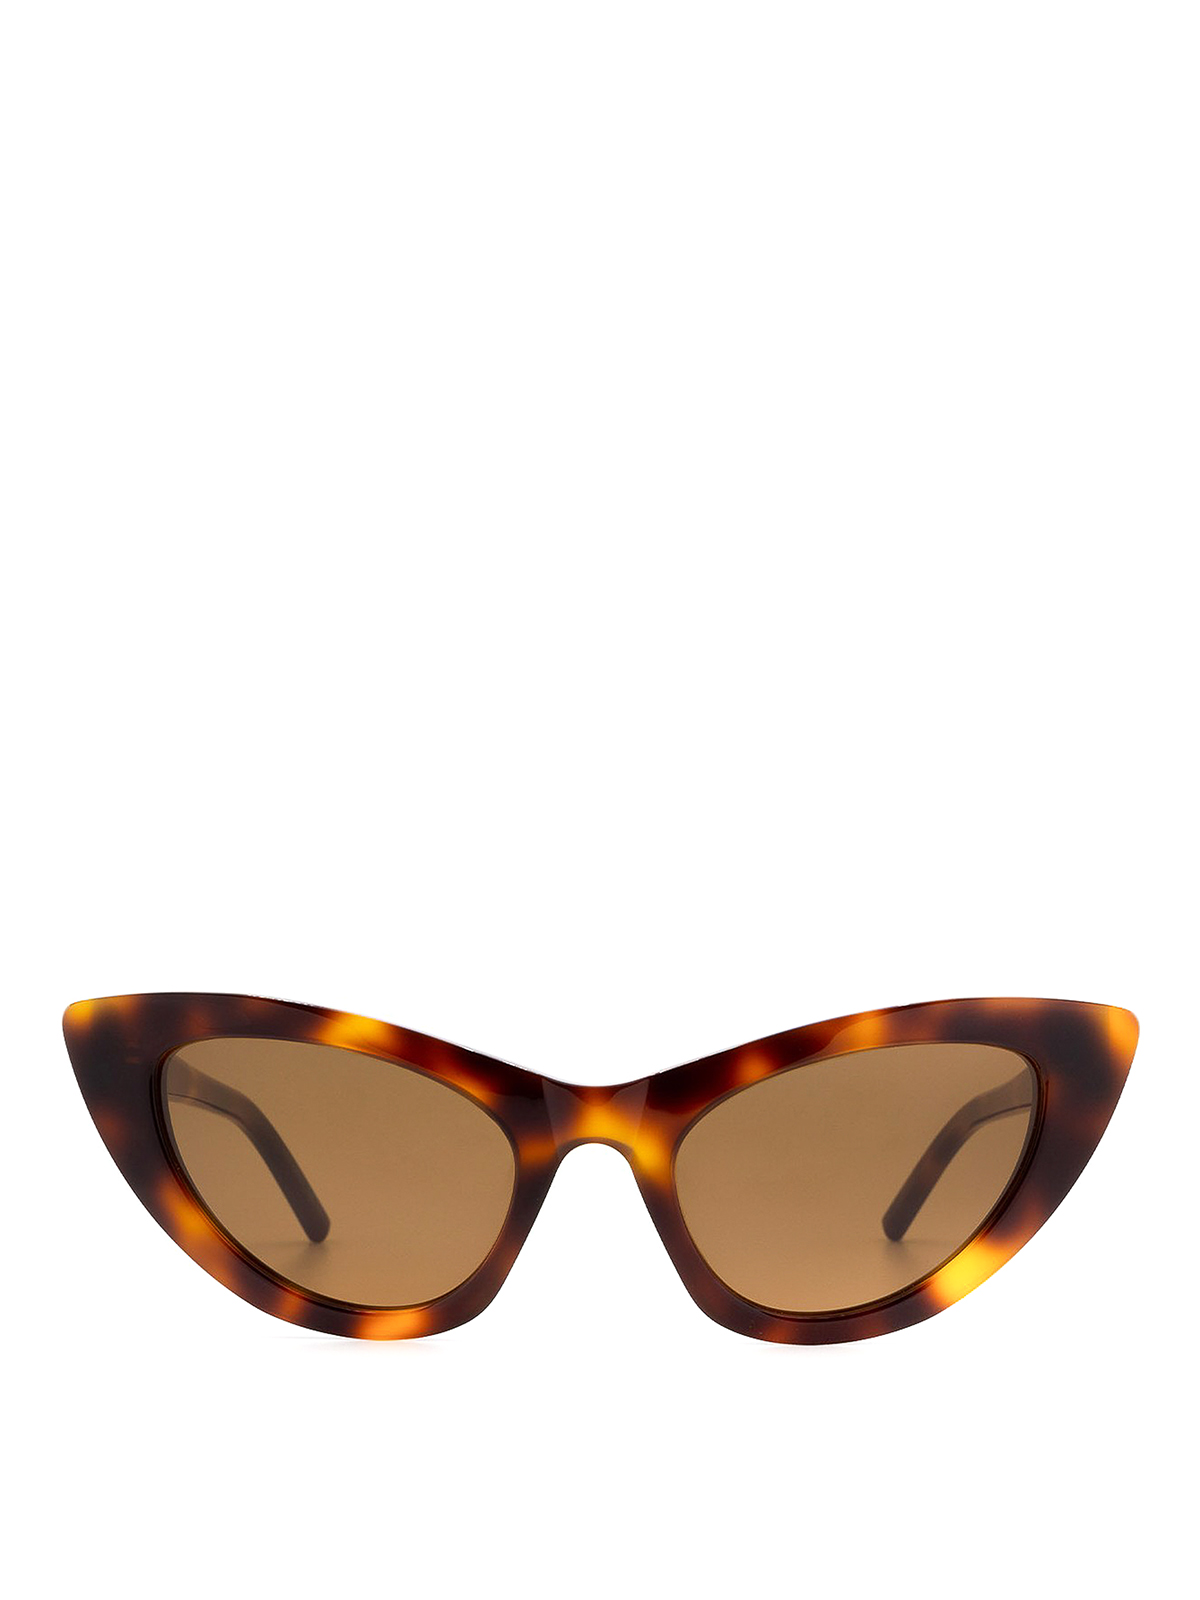 Sunglasses Saint Laurent - New Wave SL 213 Lily havana sunglasses ...